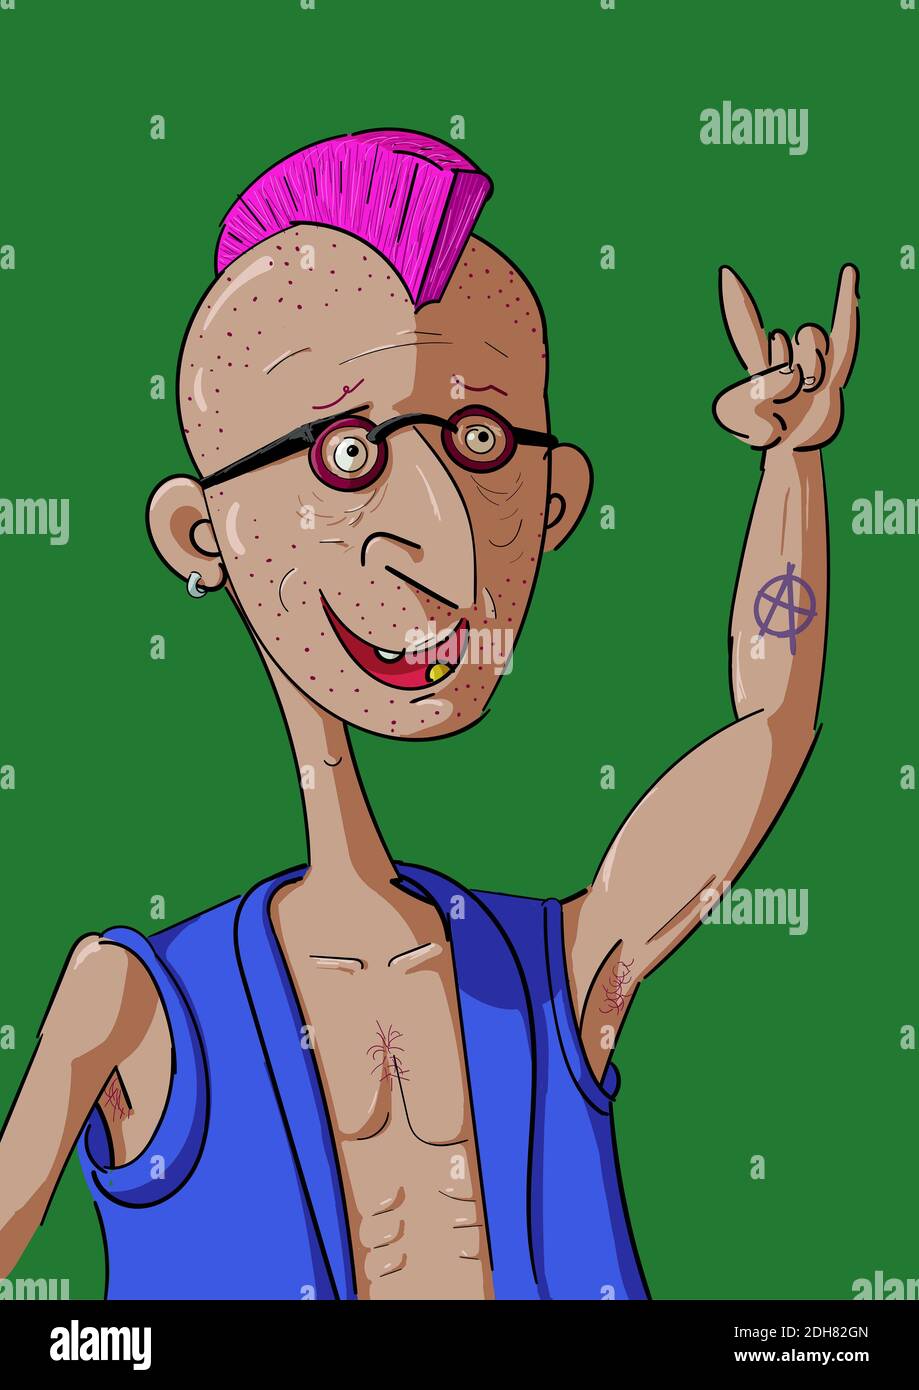 Lustige Illustration eines älteren Punkers mit rosa Haaren Stockfoto